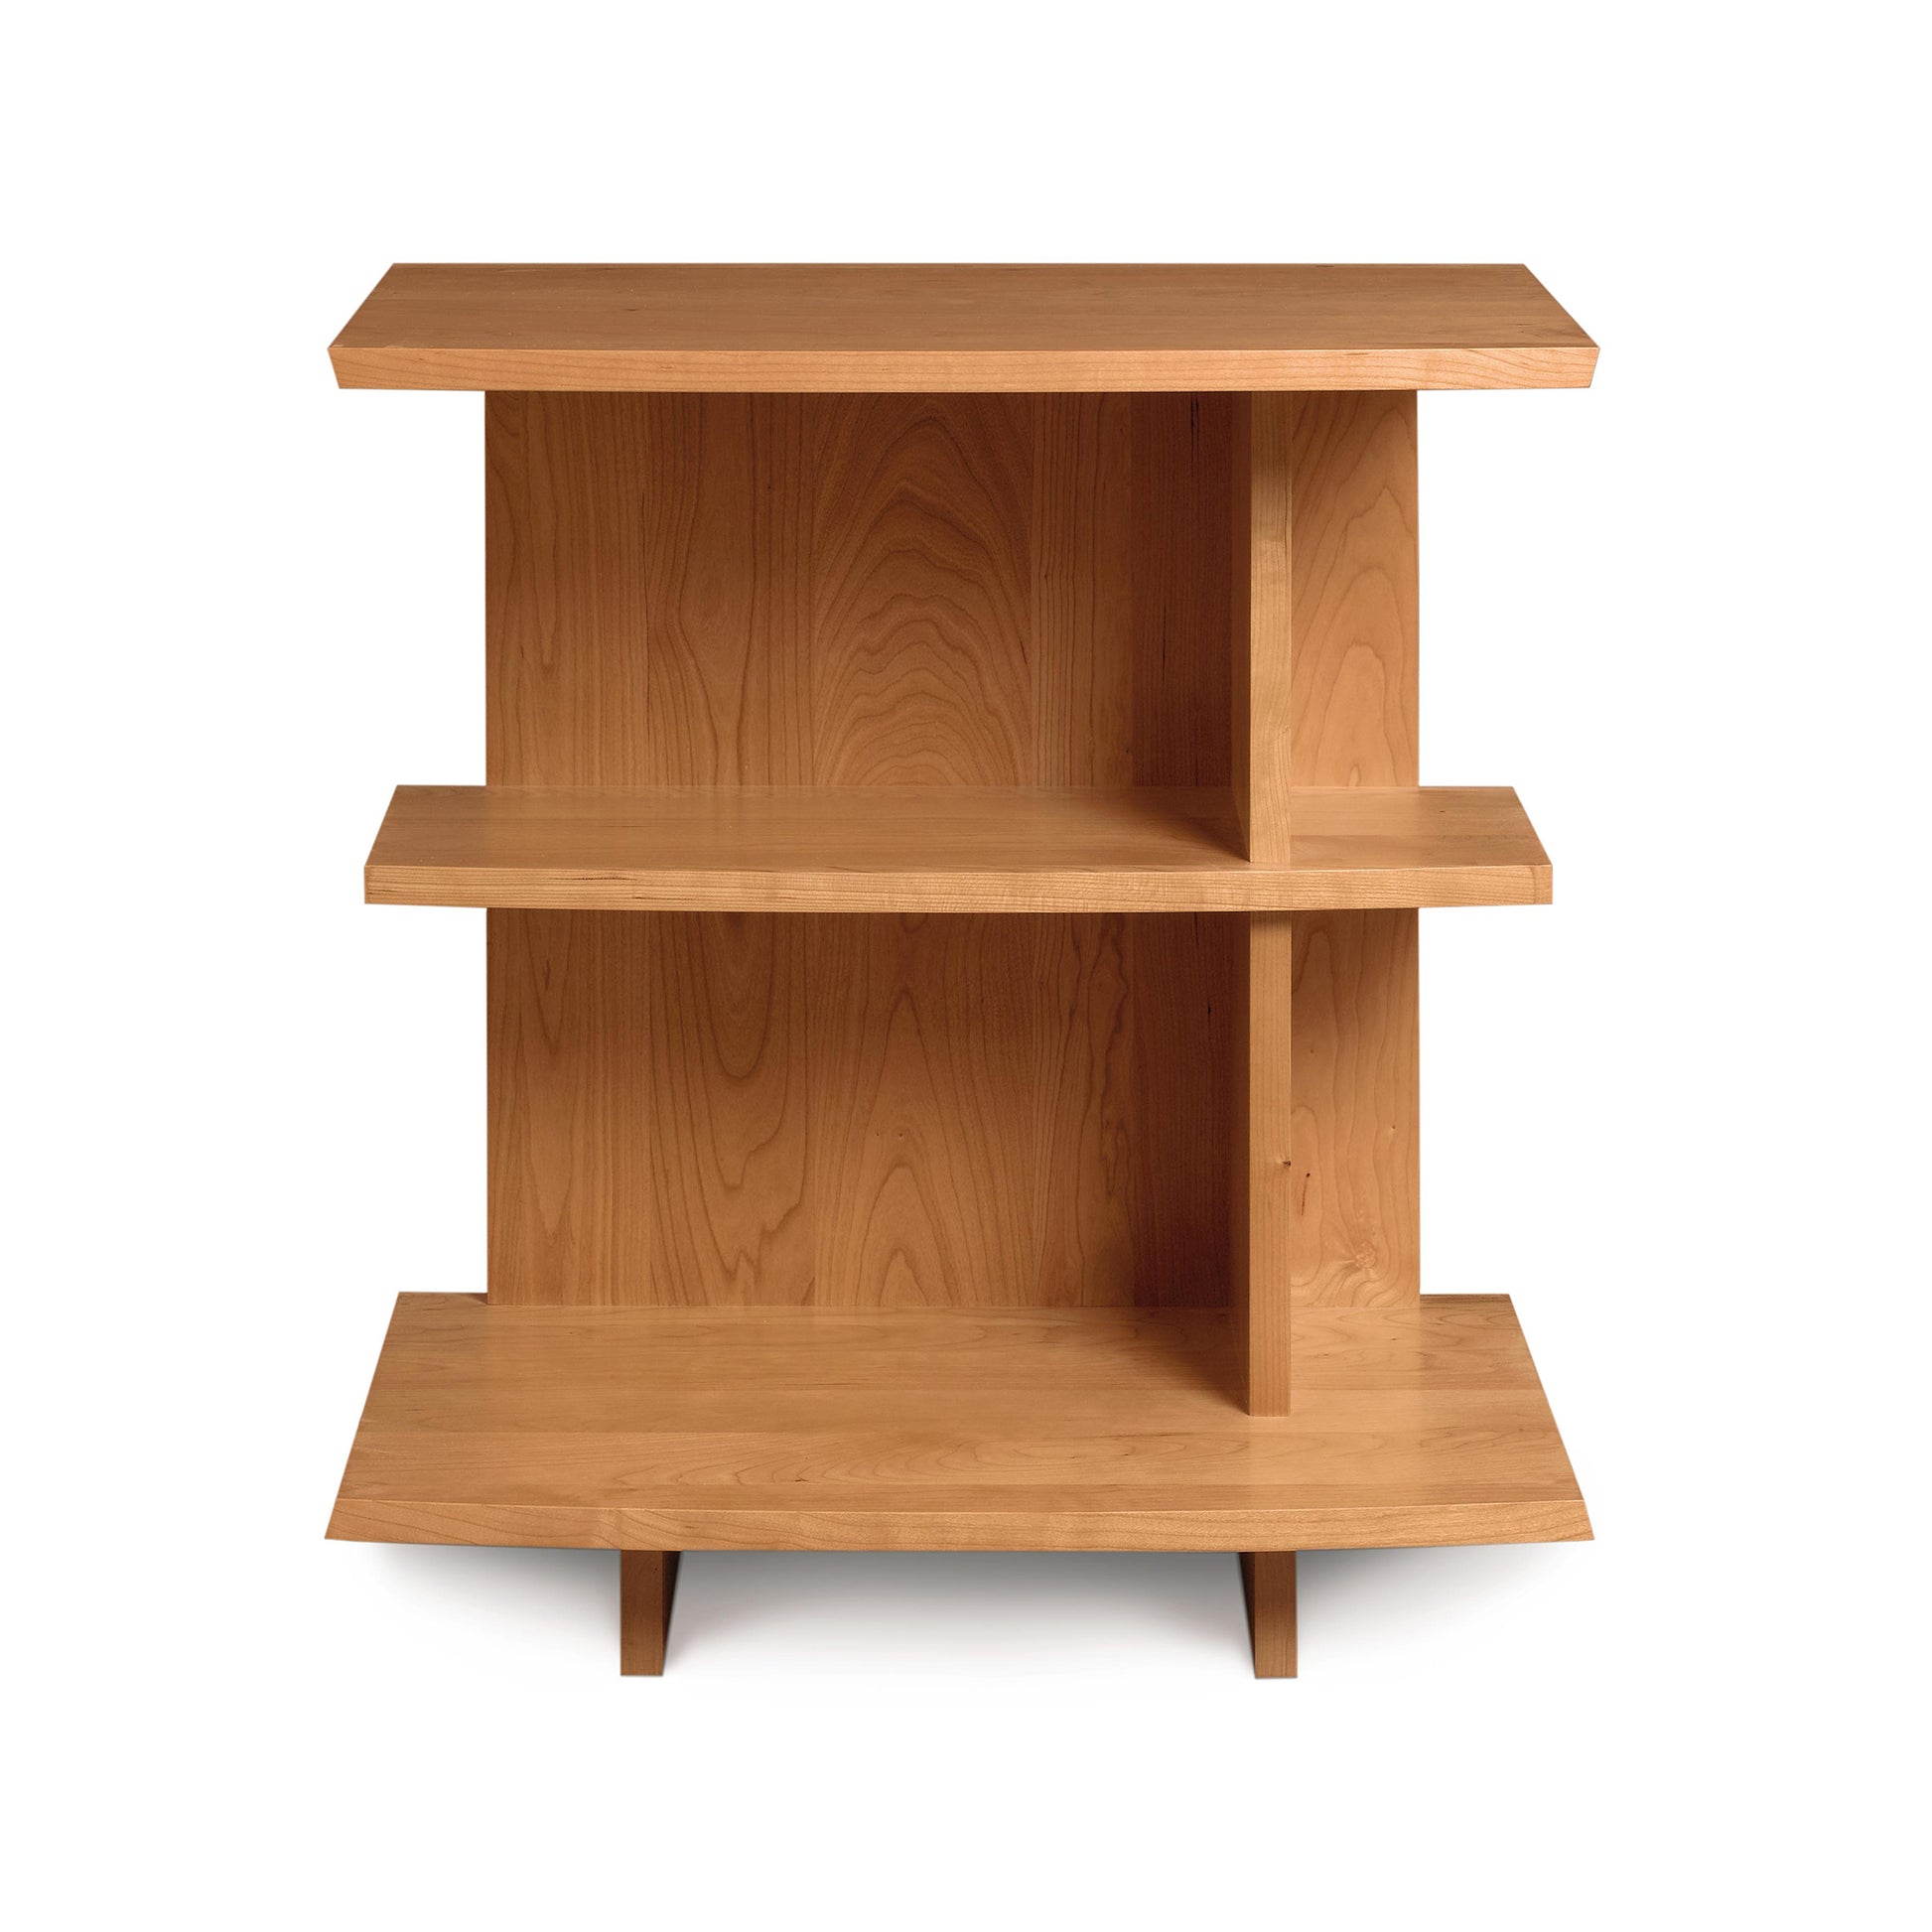 A Copeland Furniture Berkeley Open Shelf Nightstand - Left on a white background.